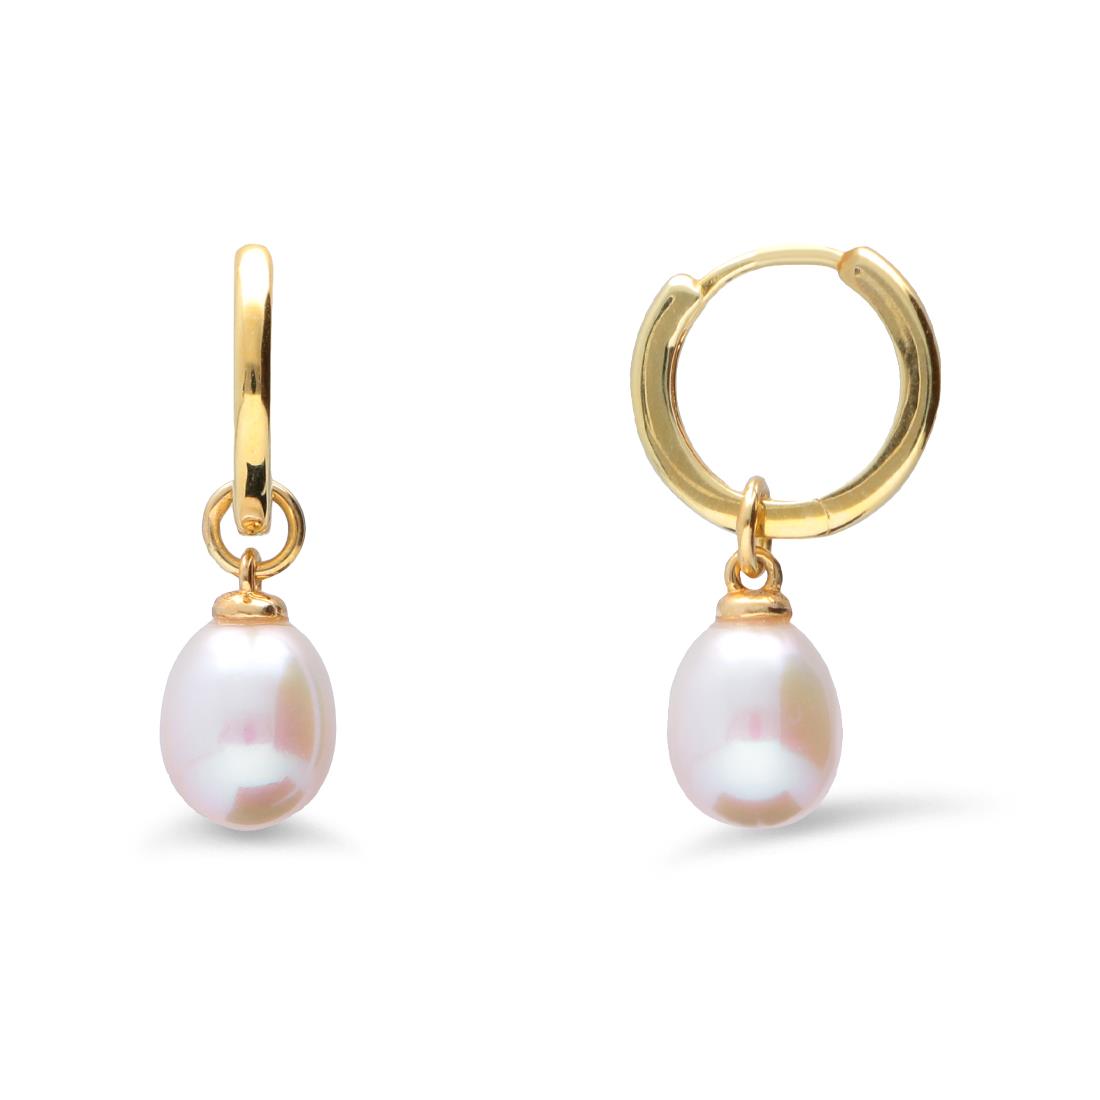 Silver hoop earrings with drop pearl - MAYUMI